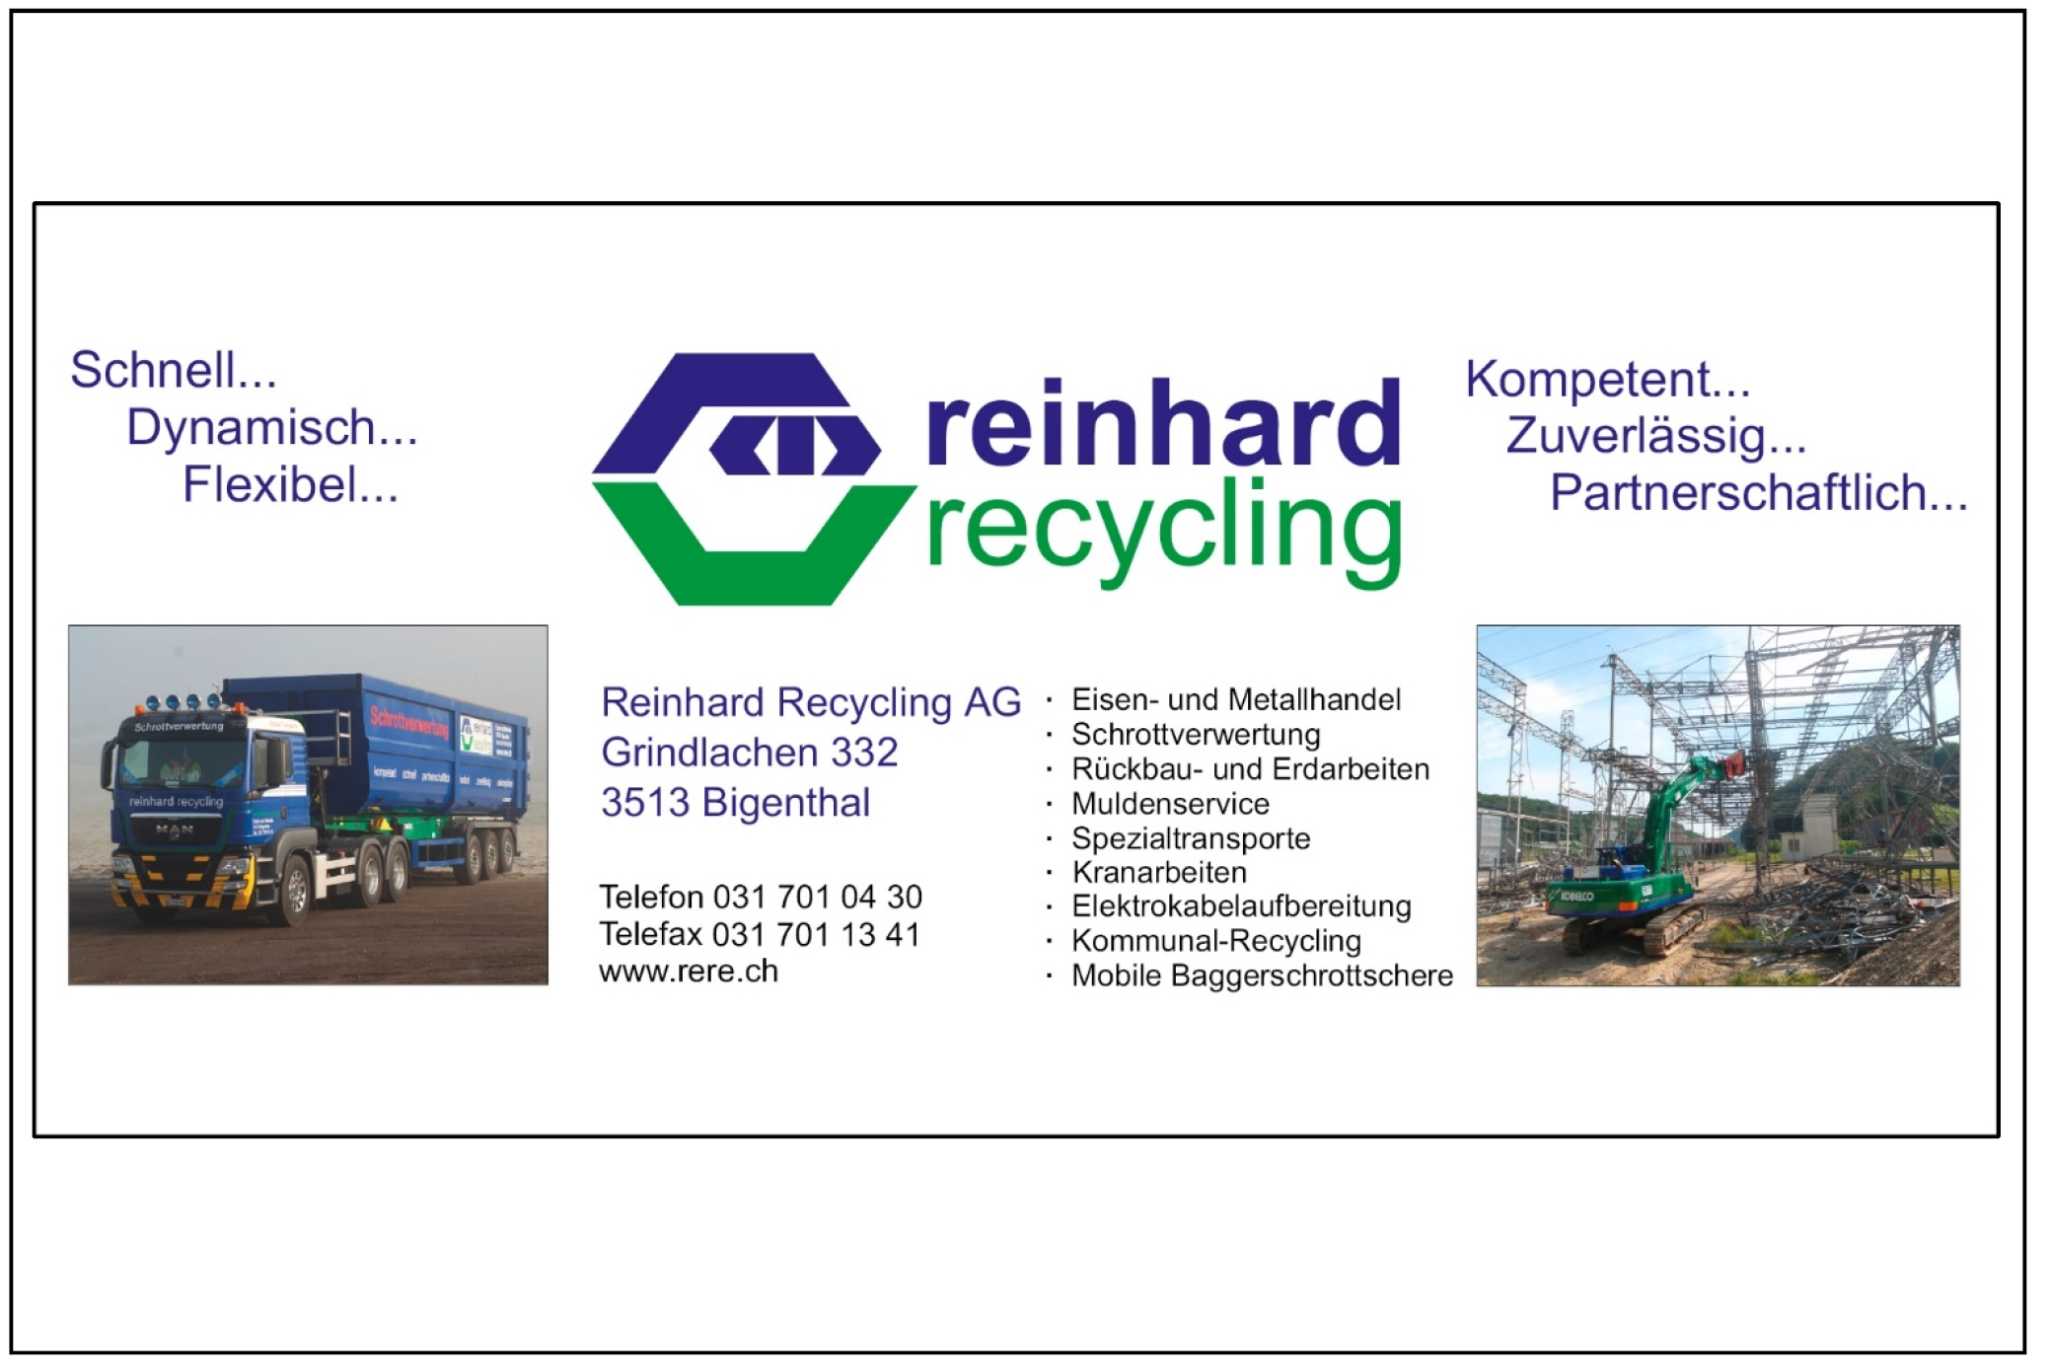 Reinhard Recycling